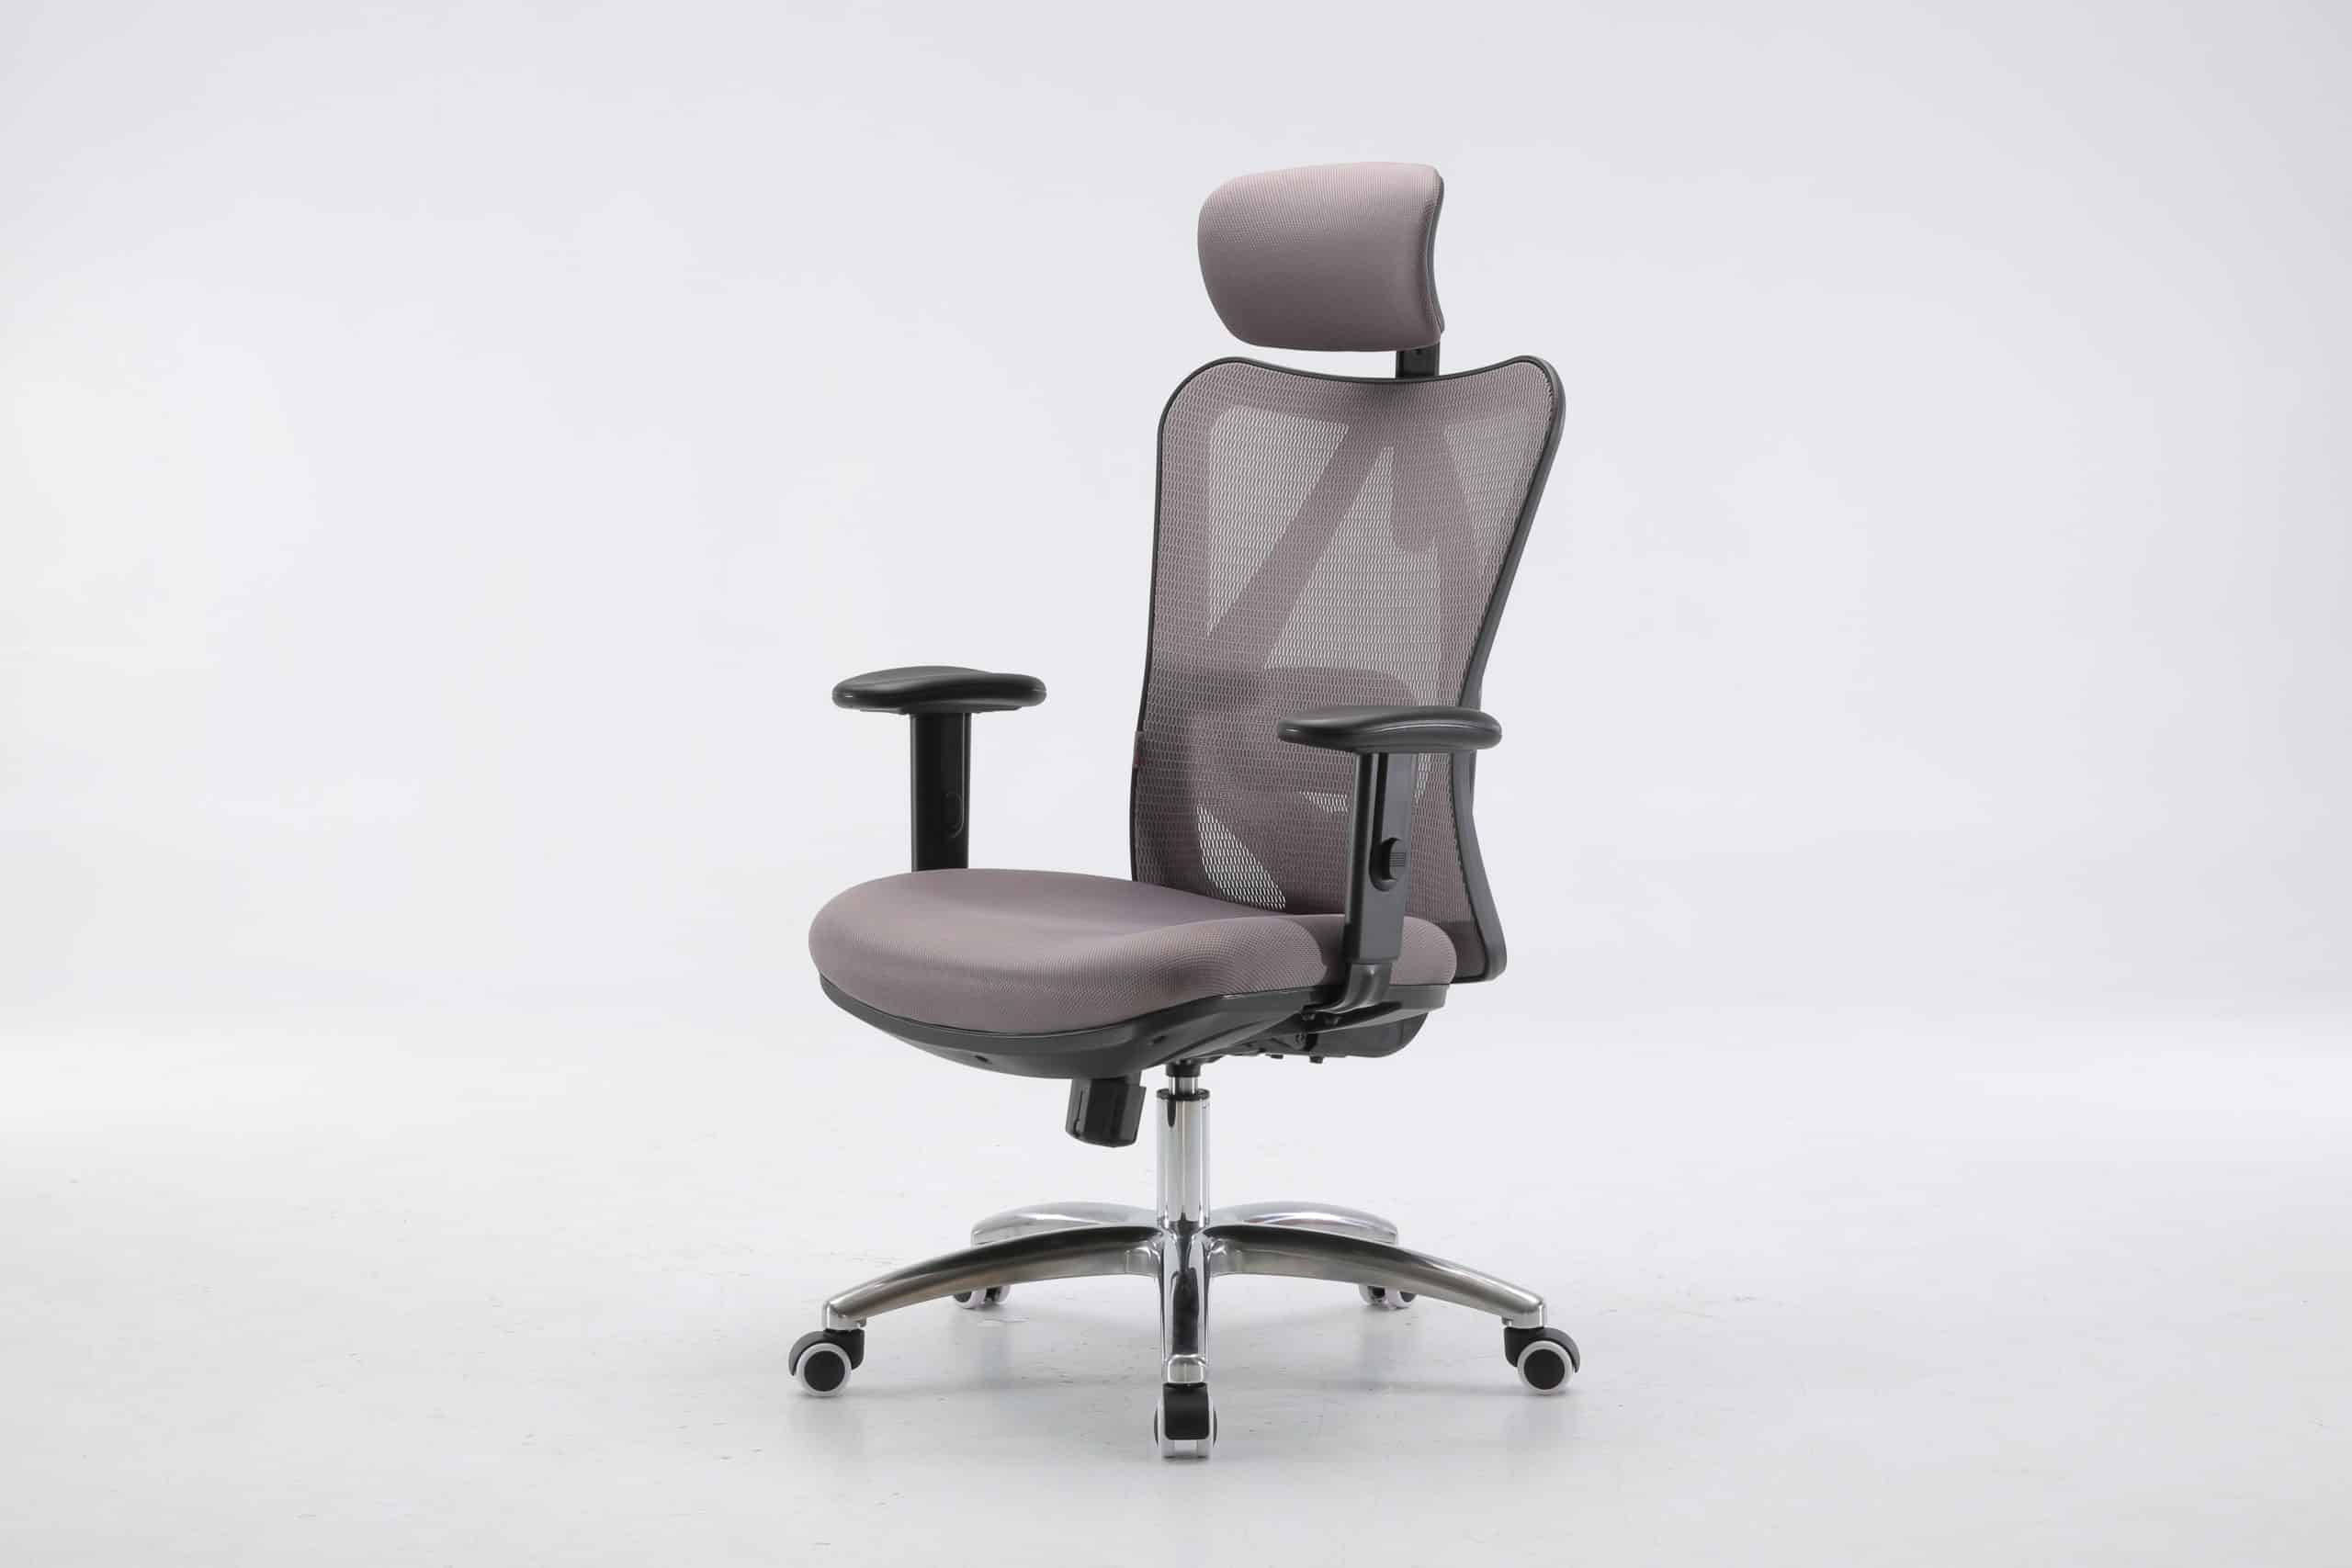 Sihoo M18 Desk Office Chair Review Hindi, Sihoo M18 vs M57